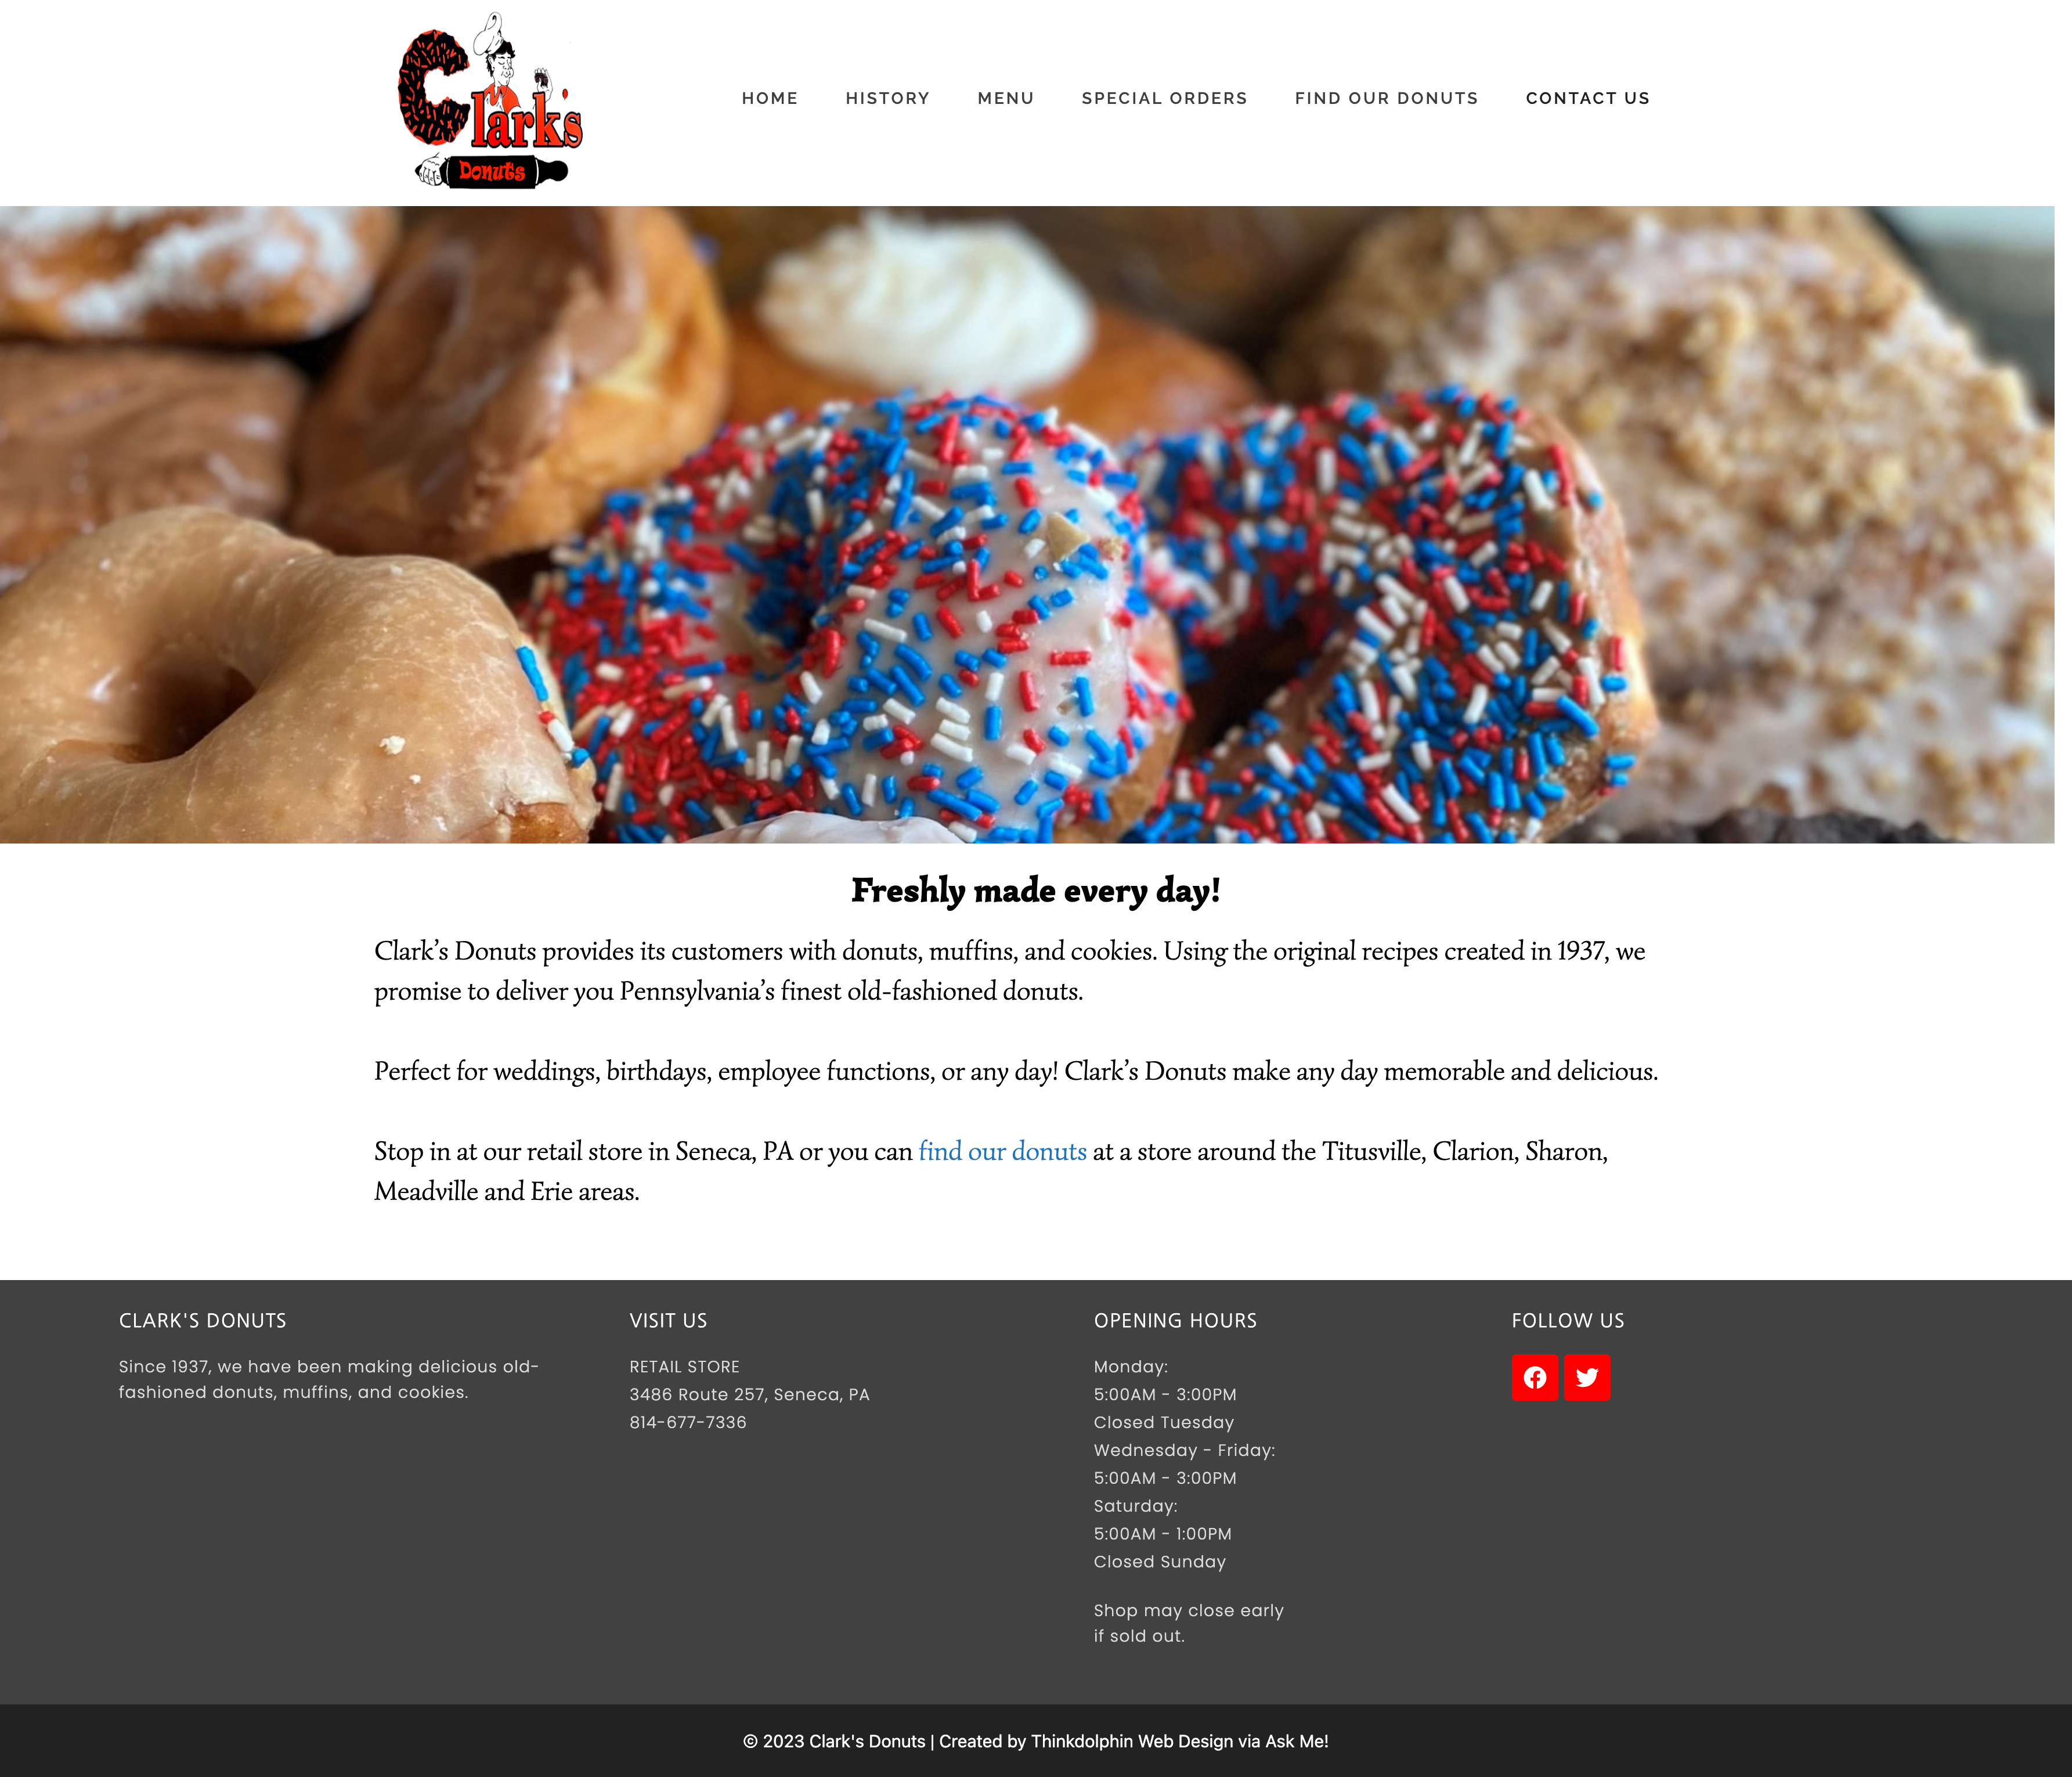 Clark's Donuts